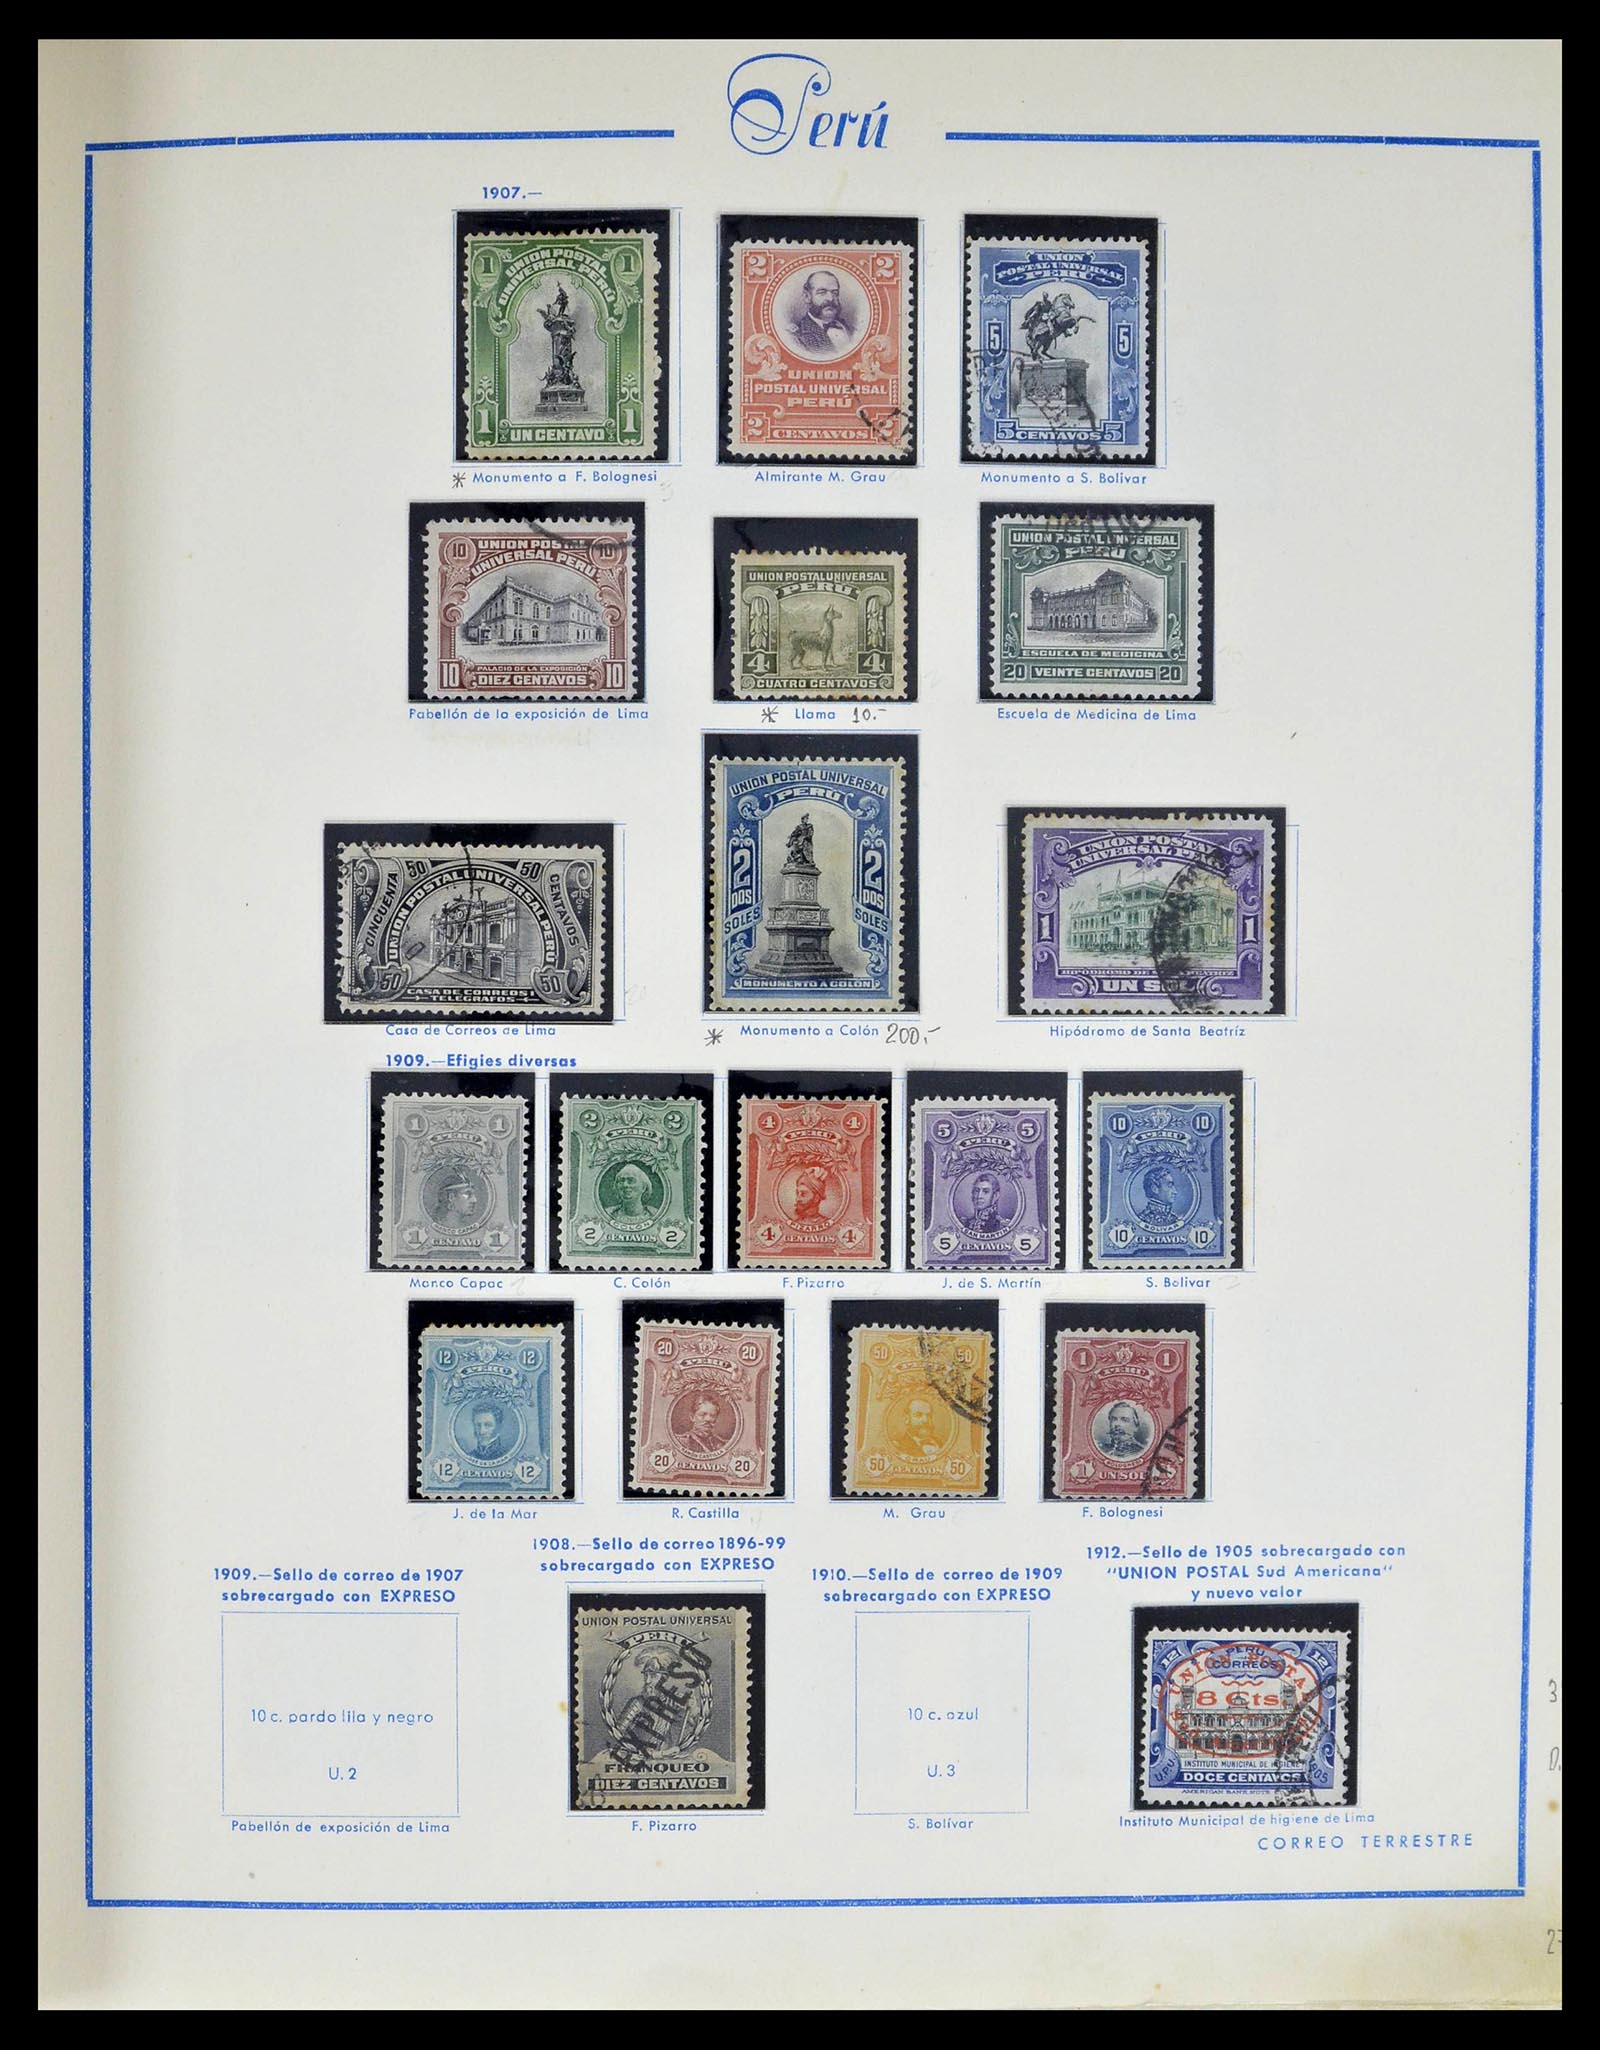 39214 0008 - Stamp collection 39214 Peru 1857-1981.